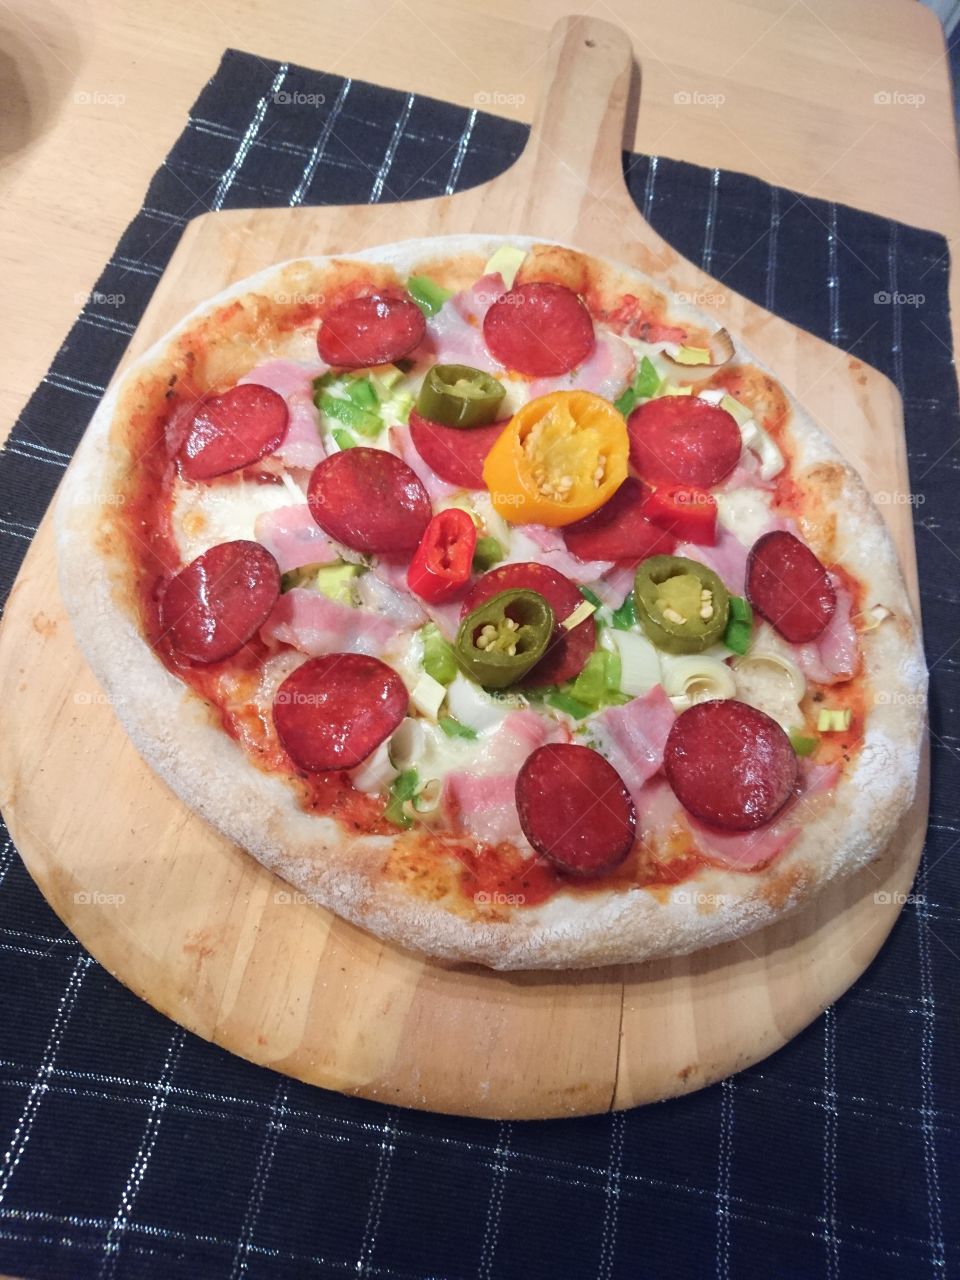 pepperoni bacon and jalapeño pizza